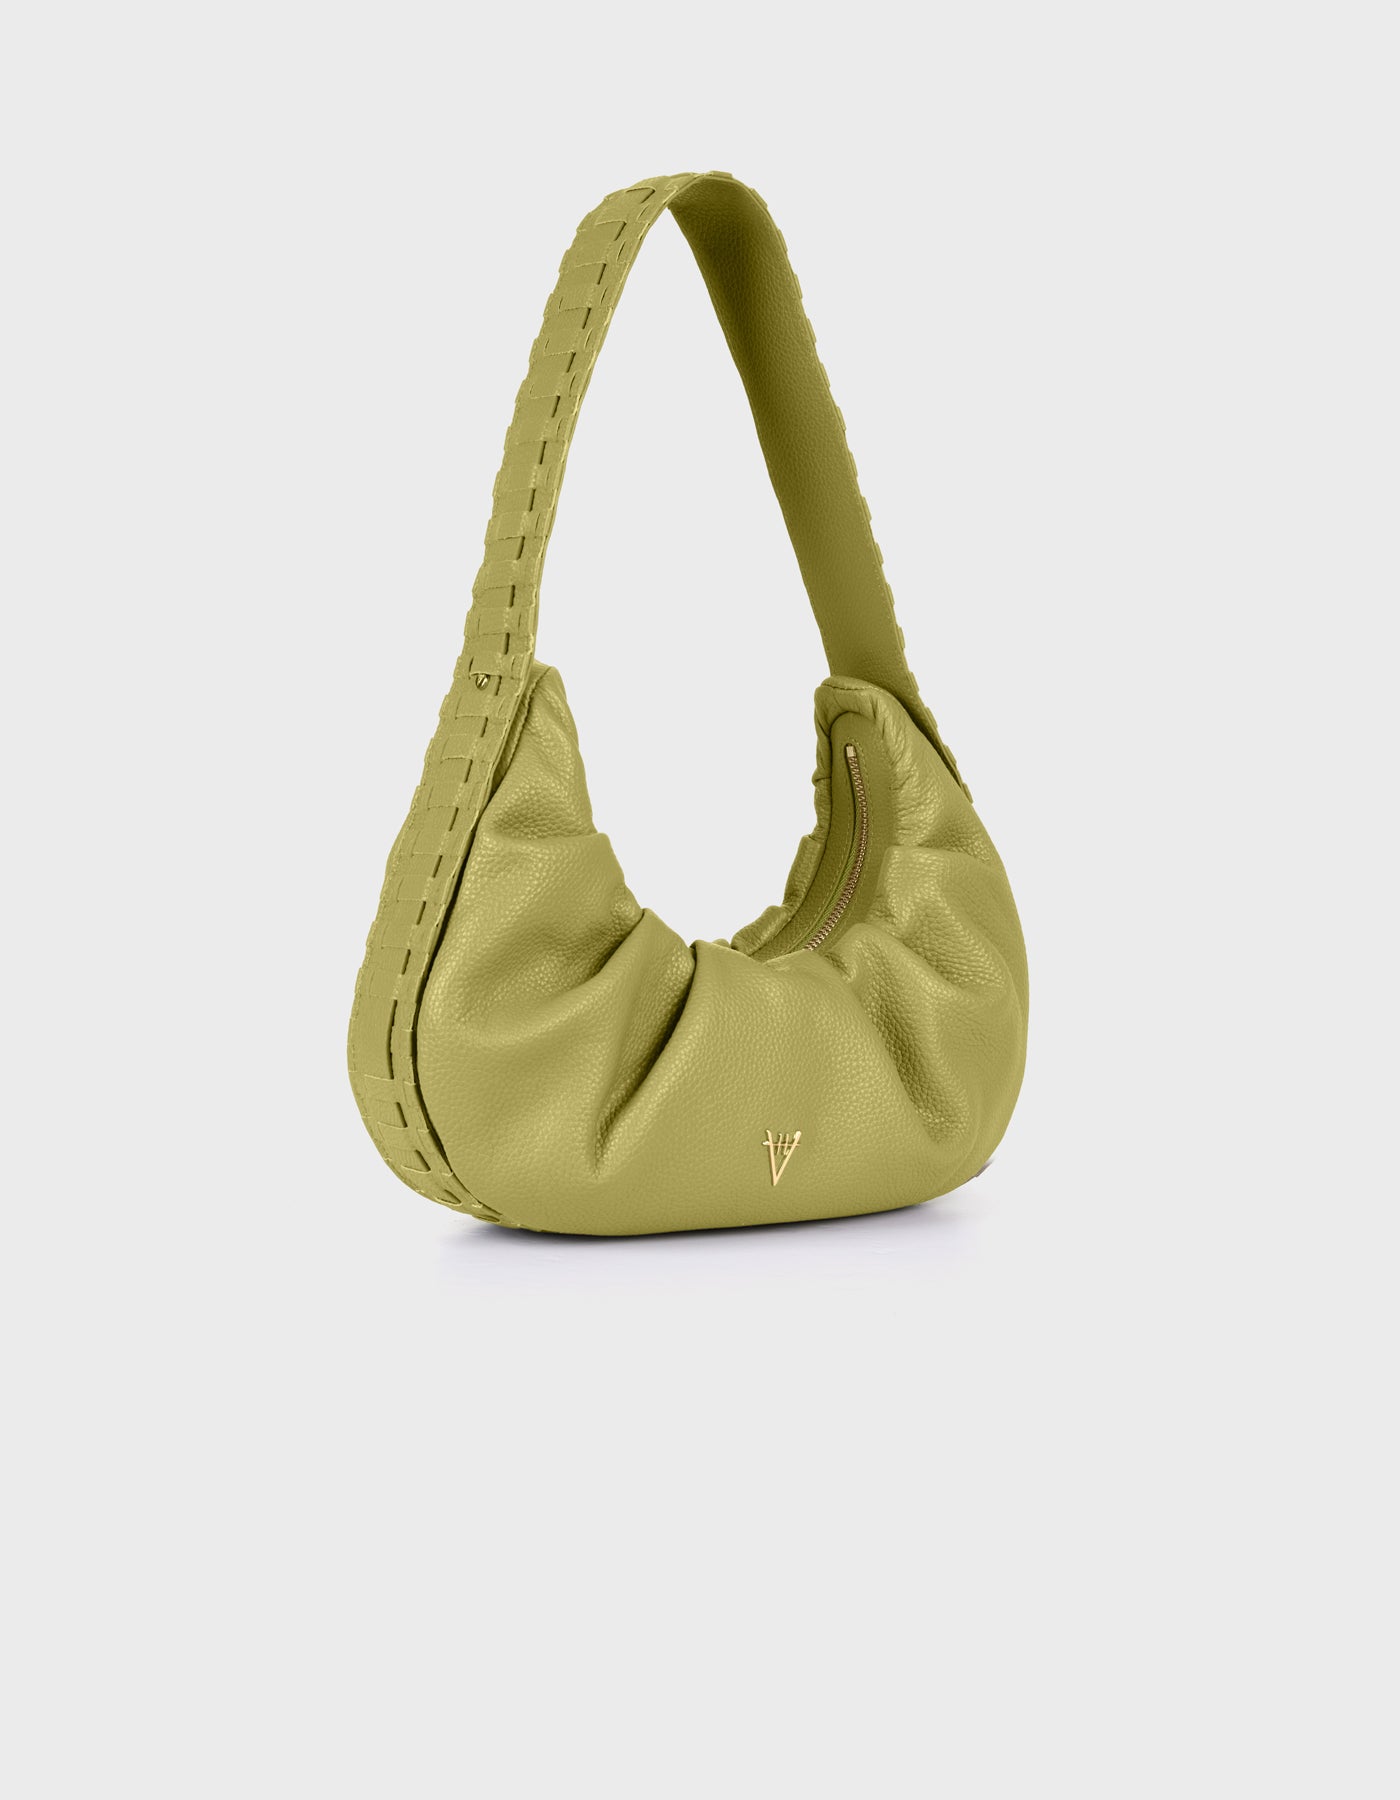 HiVa Atelier - Croissant Bag Olive